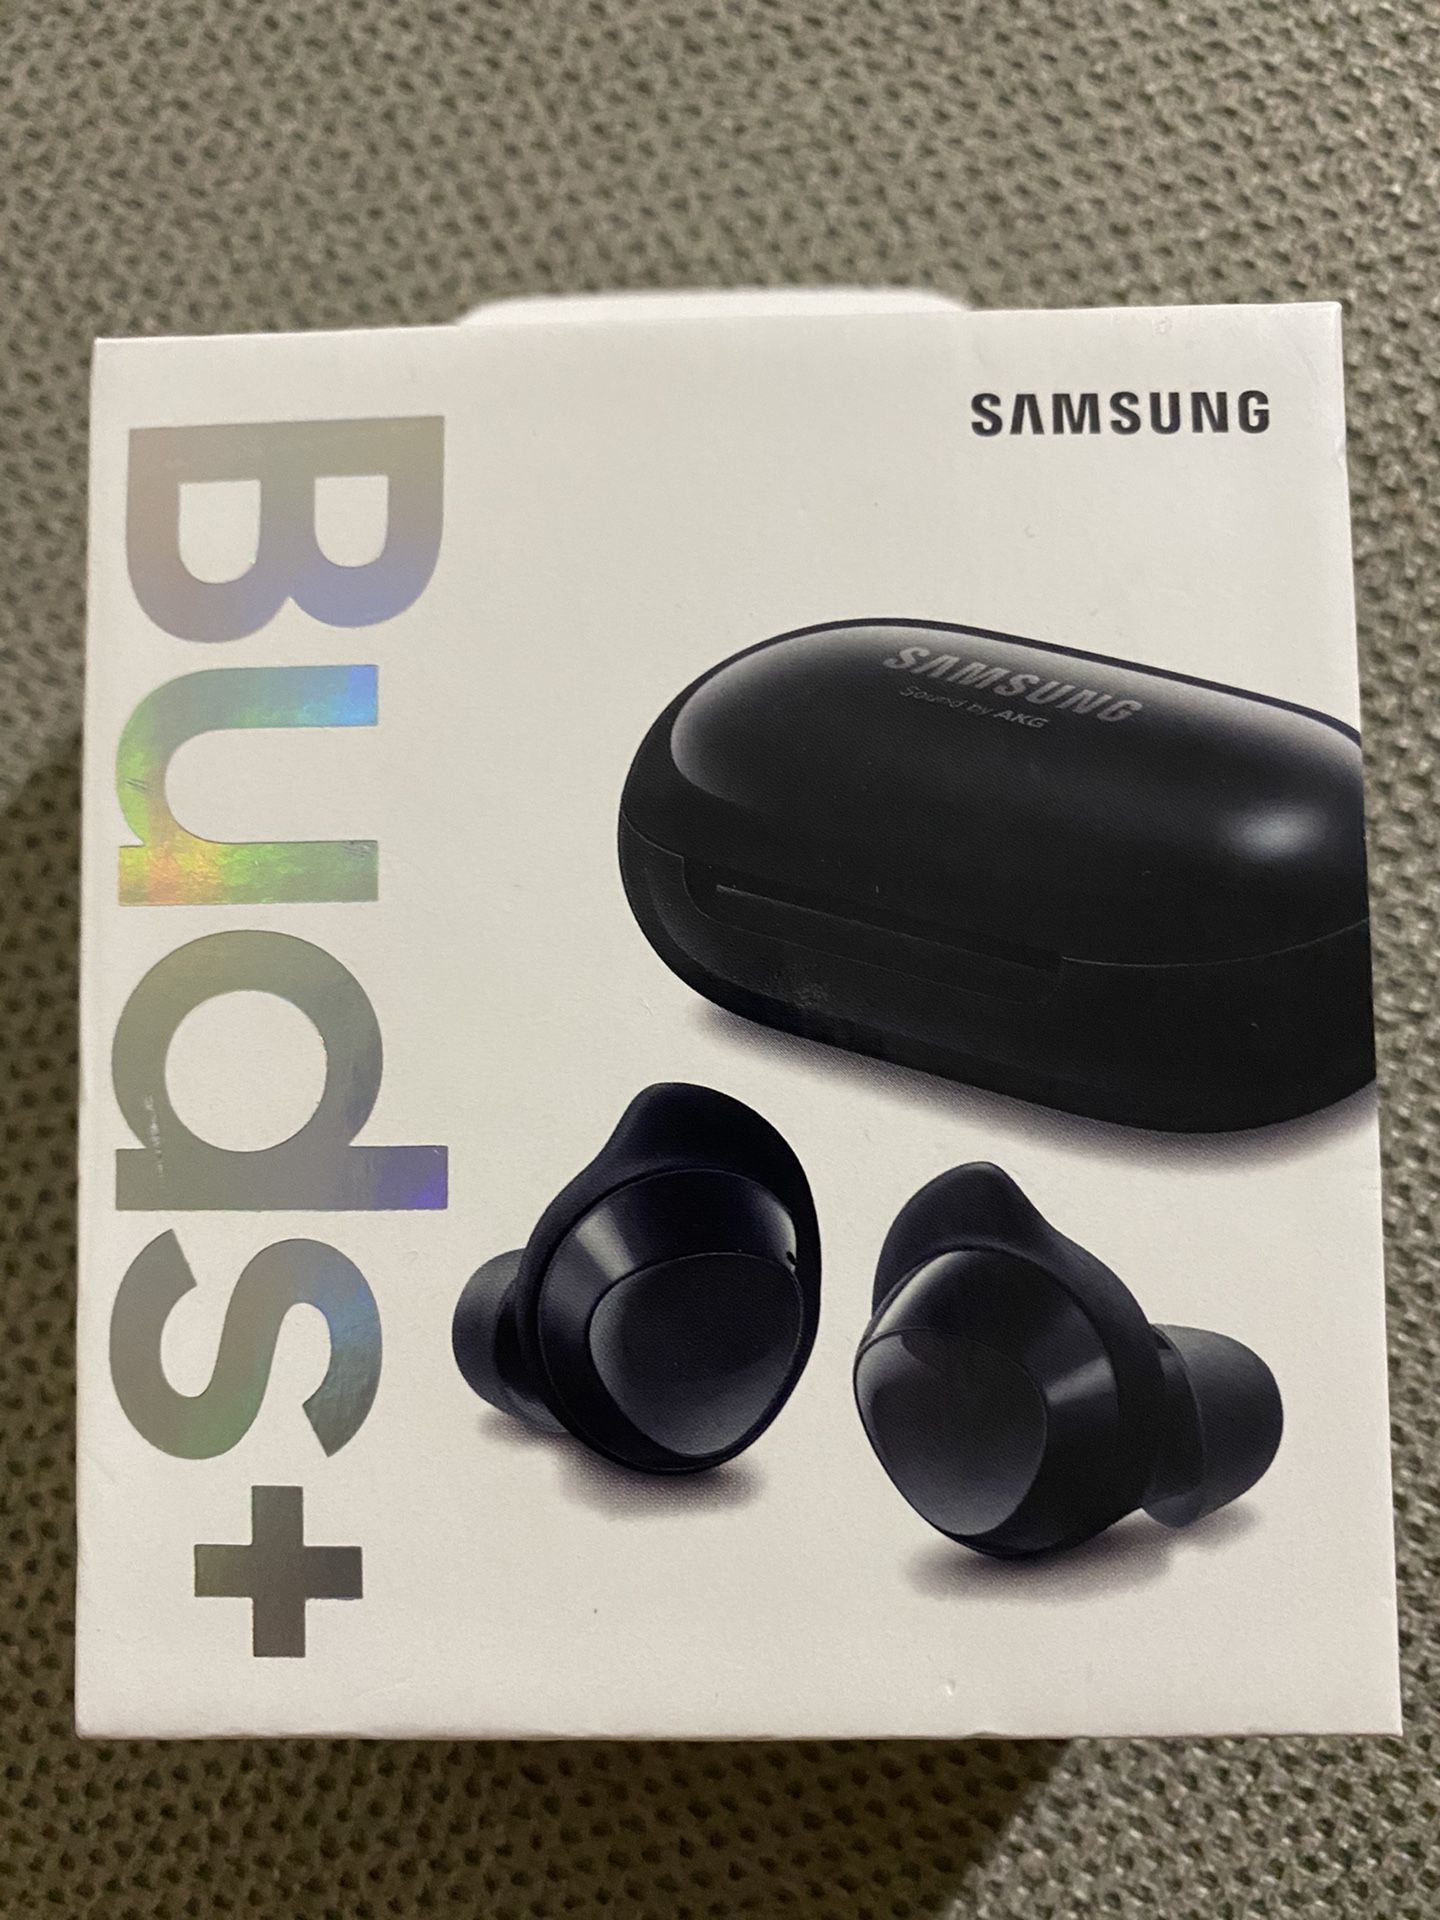 Samsung Galaxy Buds+ Earbud Headphones - Black (NEW)